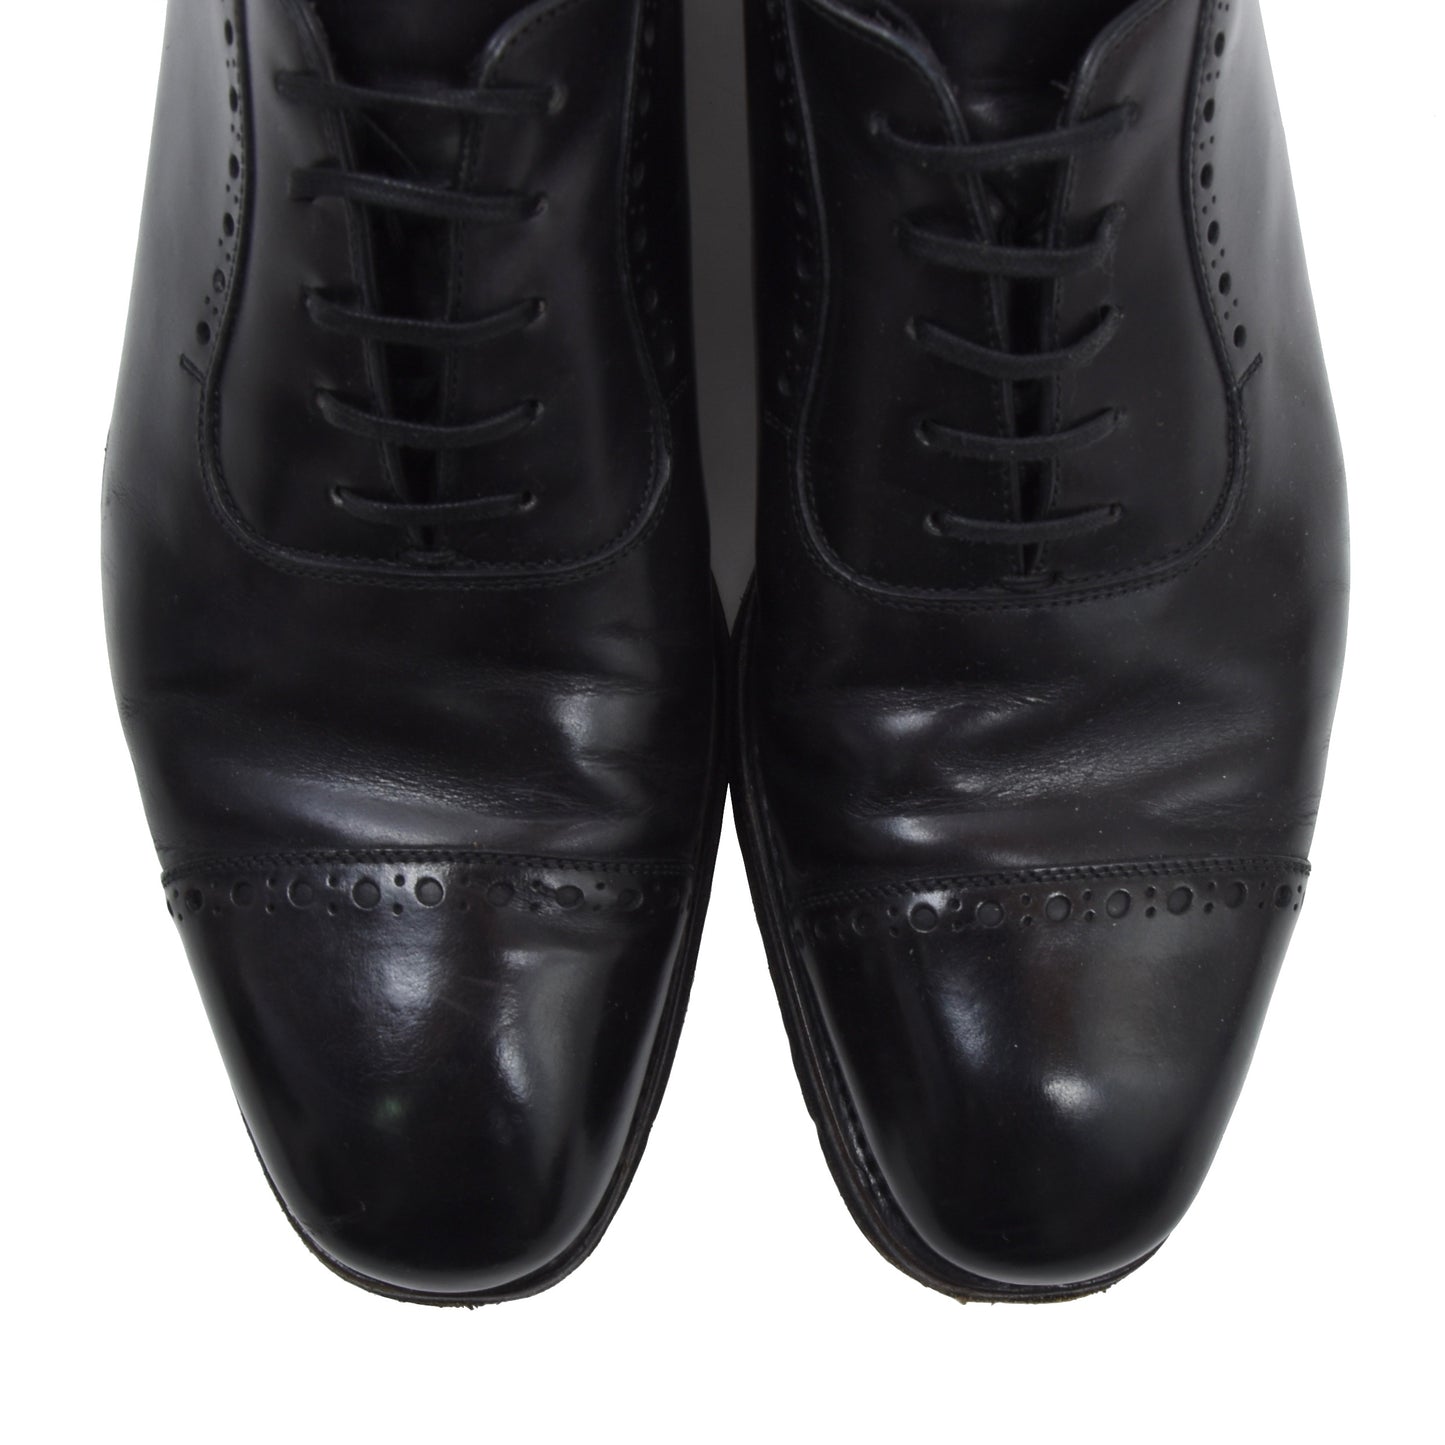 Salvatore Ferragamo Tramezza Shoes Size 7 EEE - Black